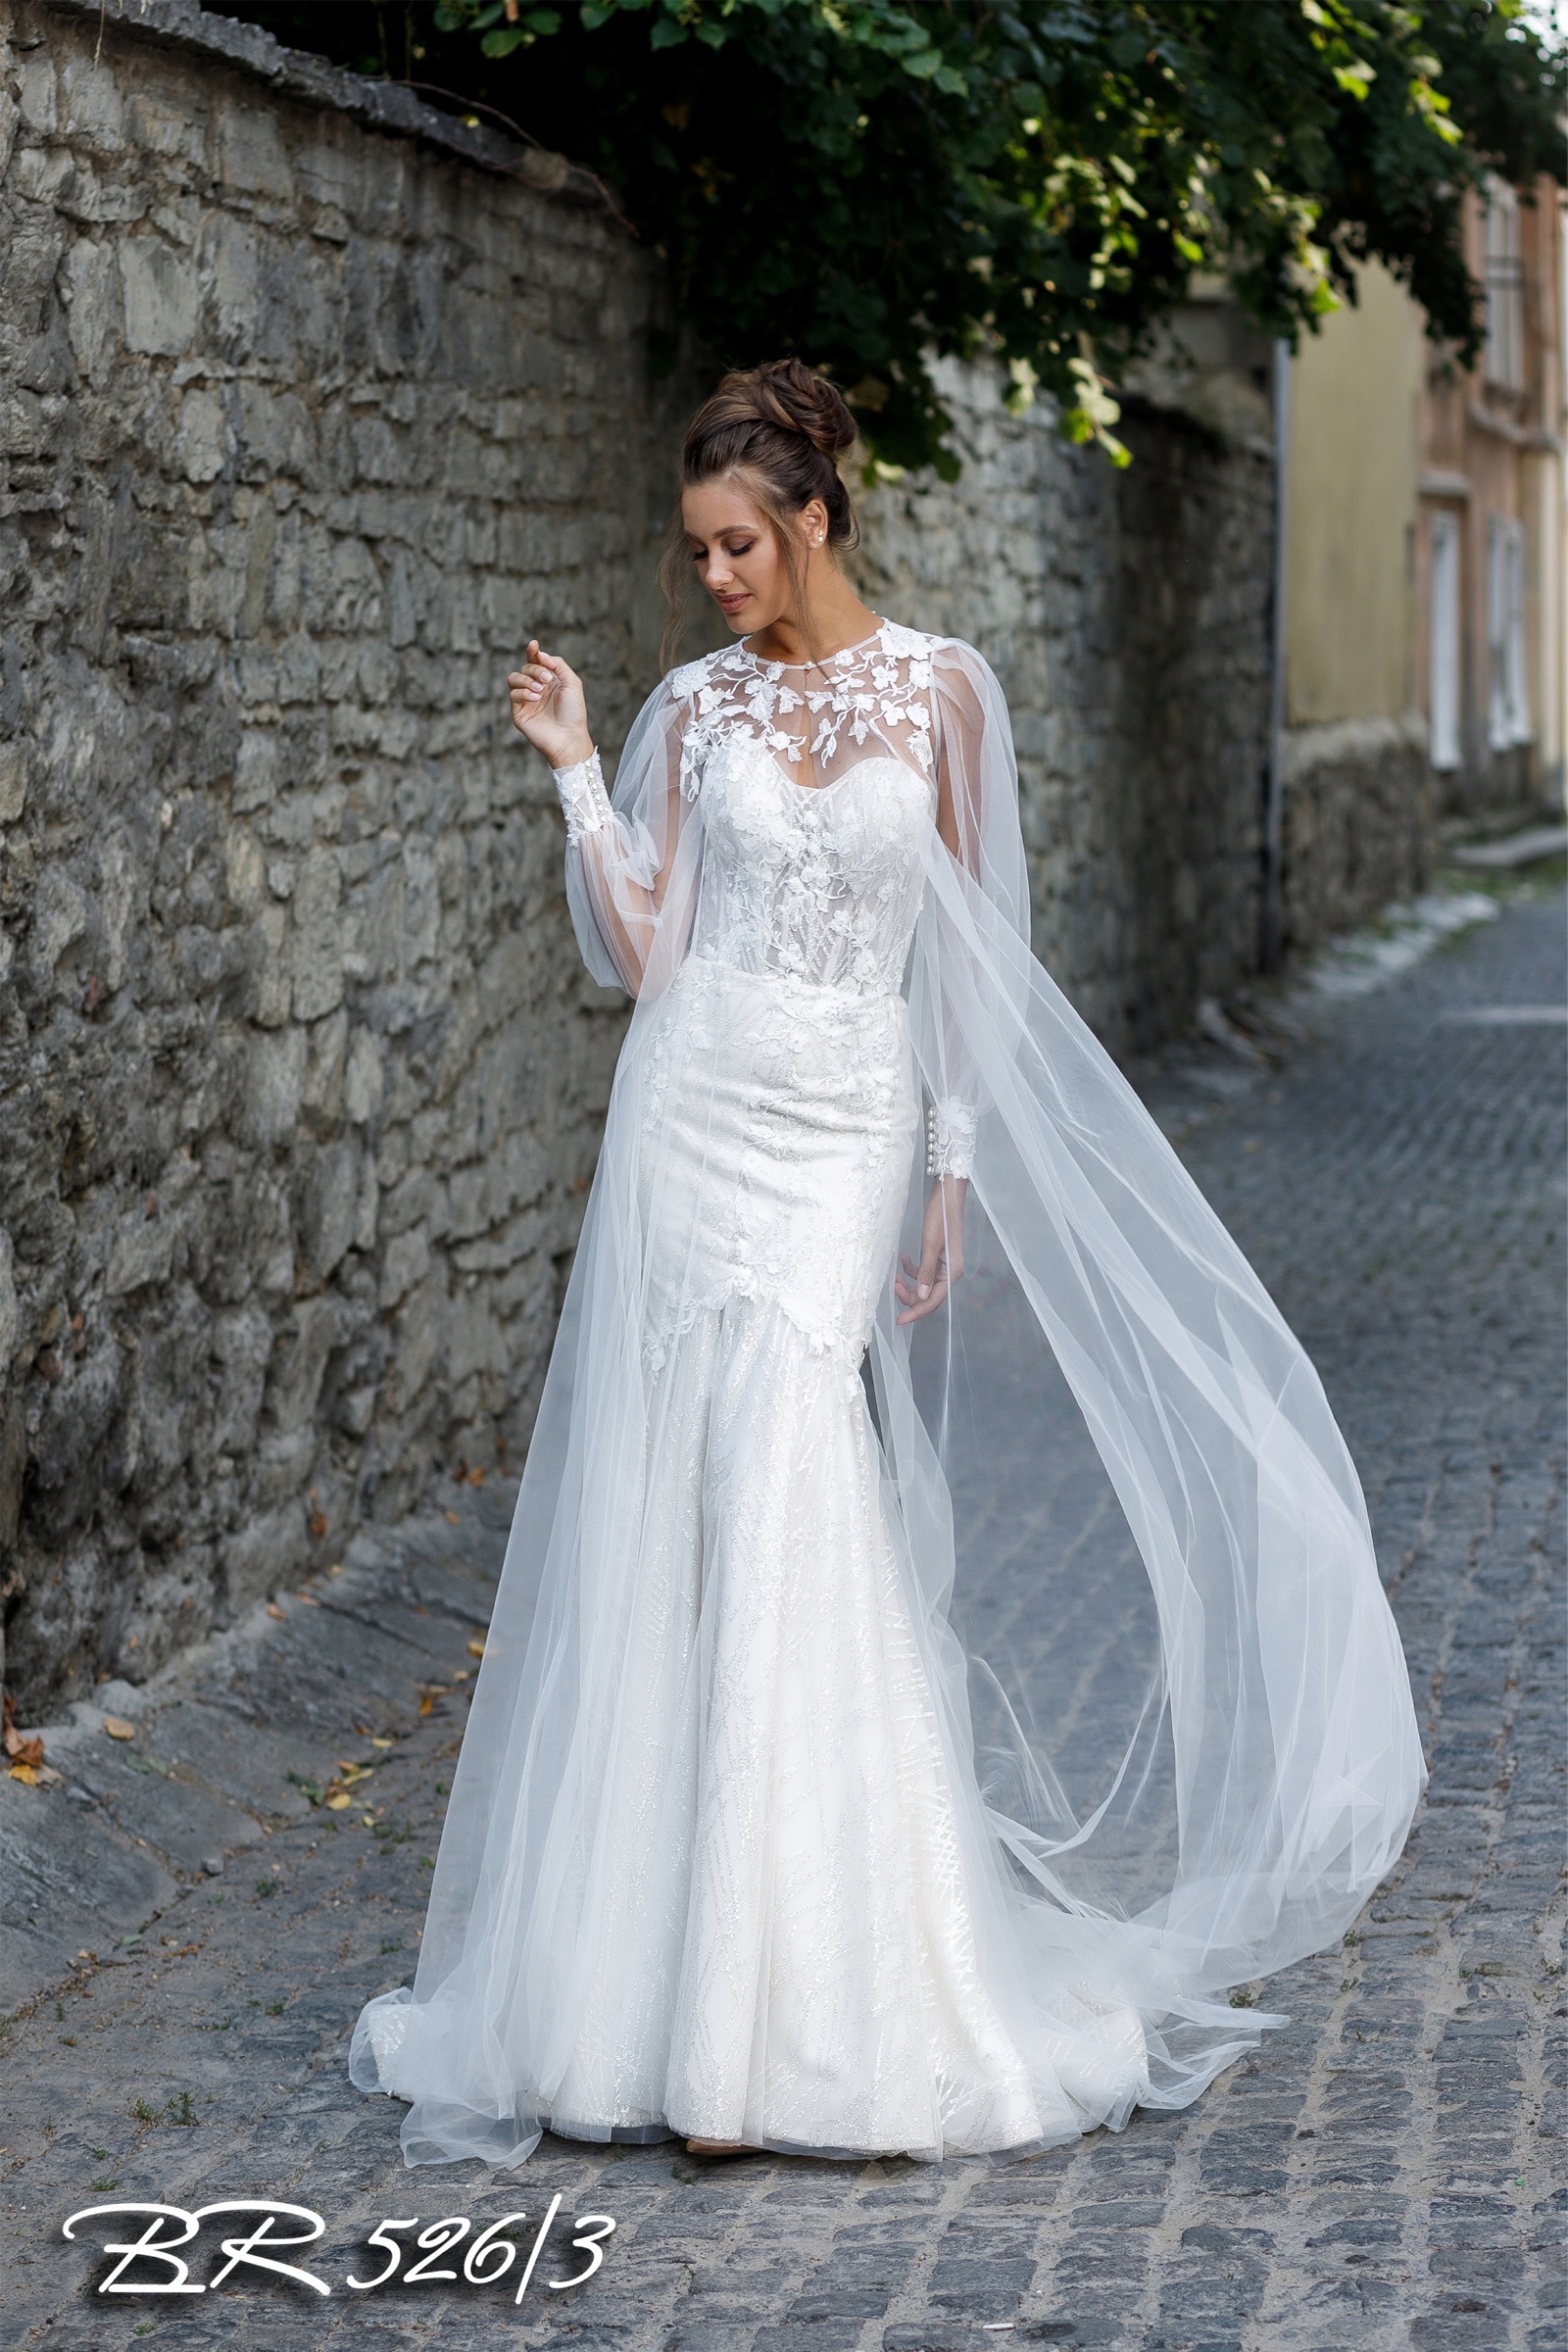 2020 wedding dress sweetheart neckline strapless trumpet silhouette skirt details court train lace embroidery detachable long sleeve cape